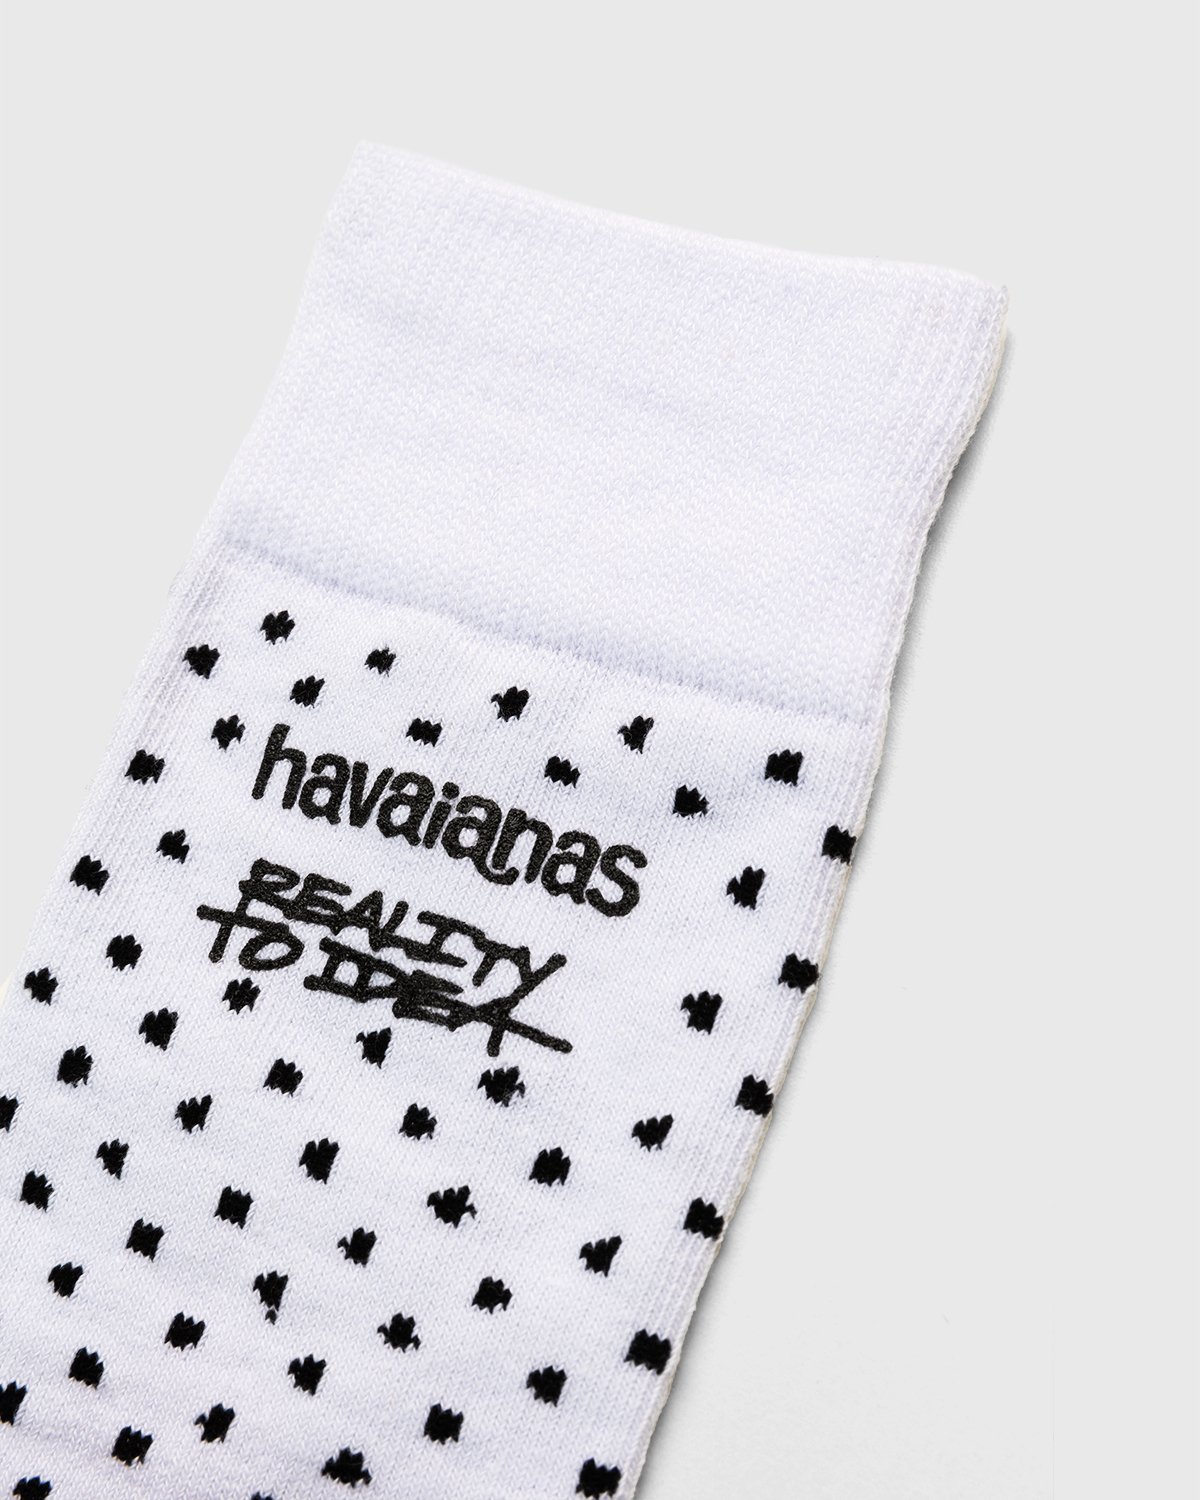 havaianas - Reality to Idea by Joshuas Vides Split-Toe Socks White - Accessories - White - Image 3